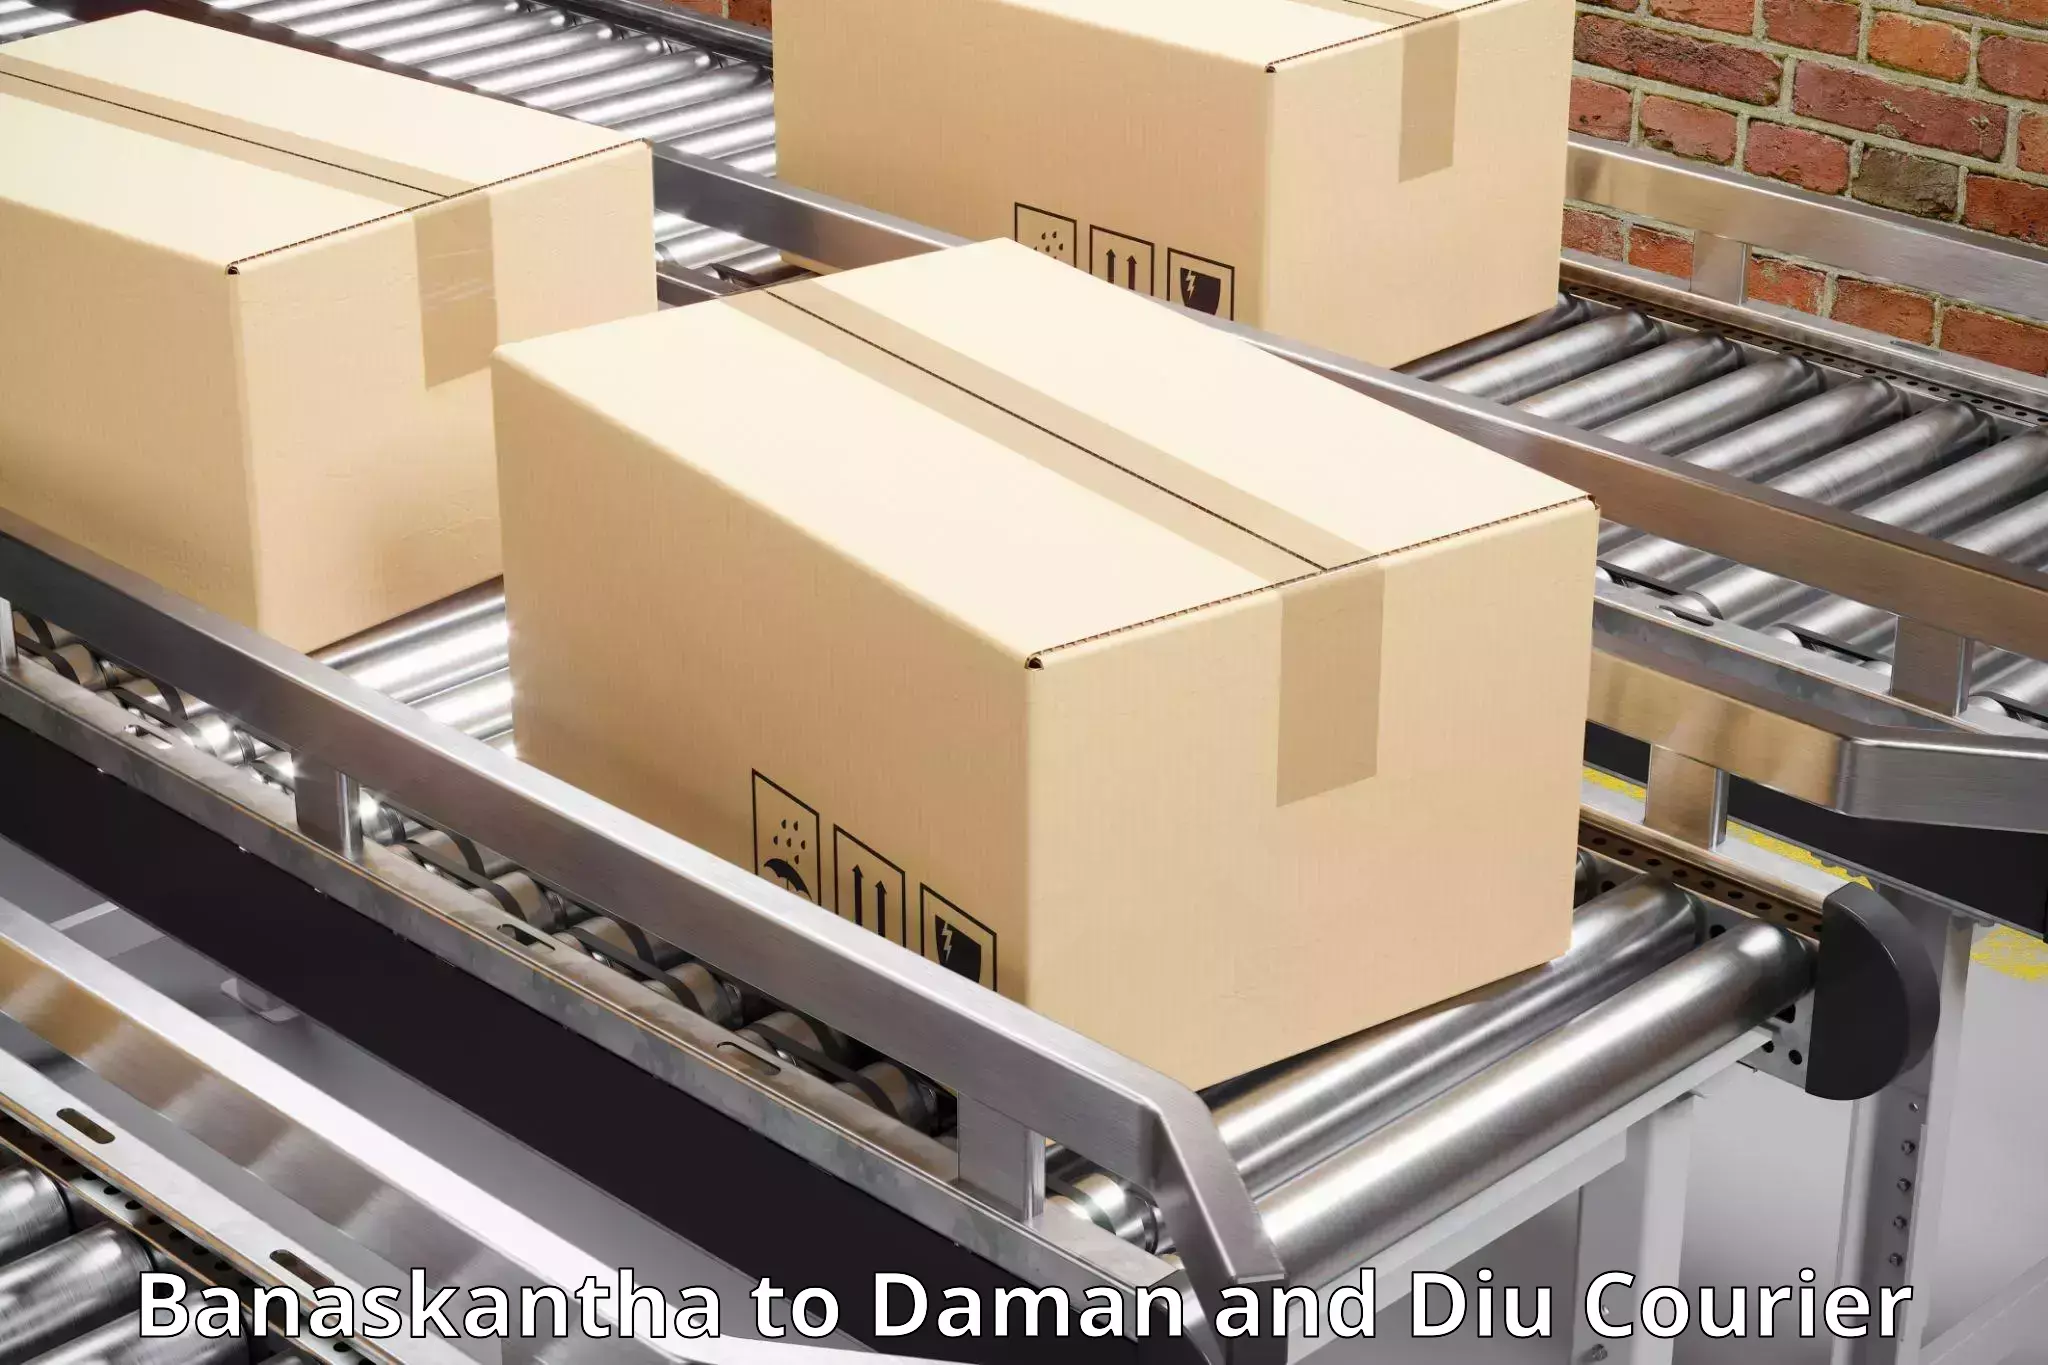 Automated shipping processes in Banaskantha to Diu